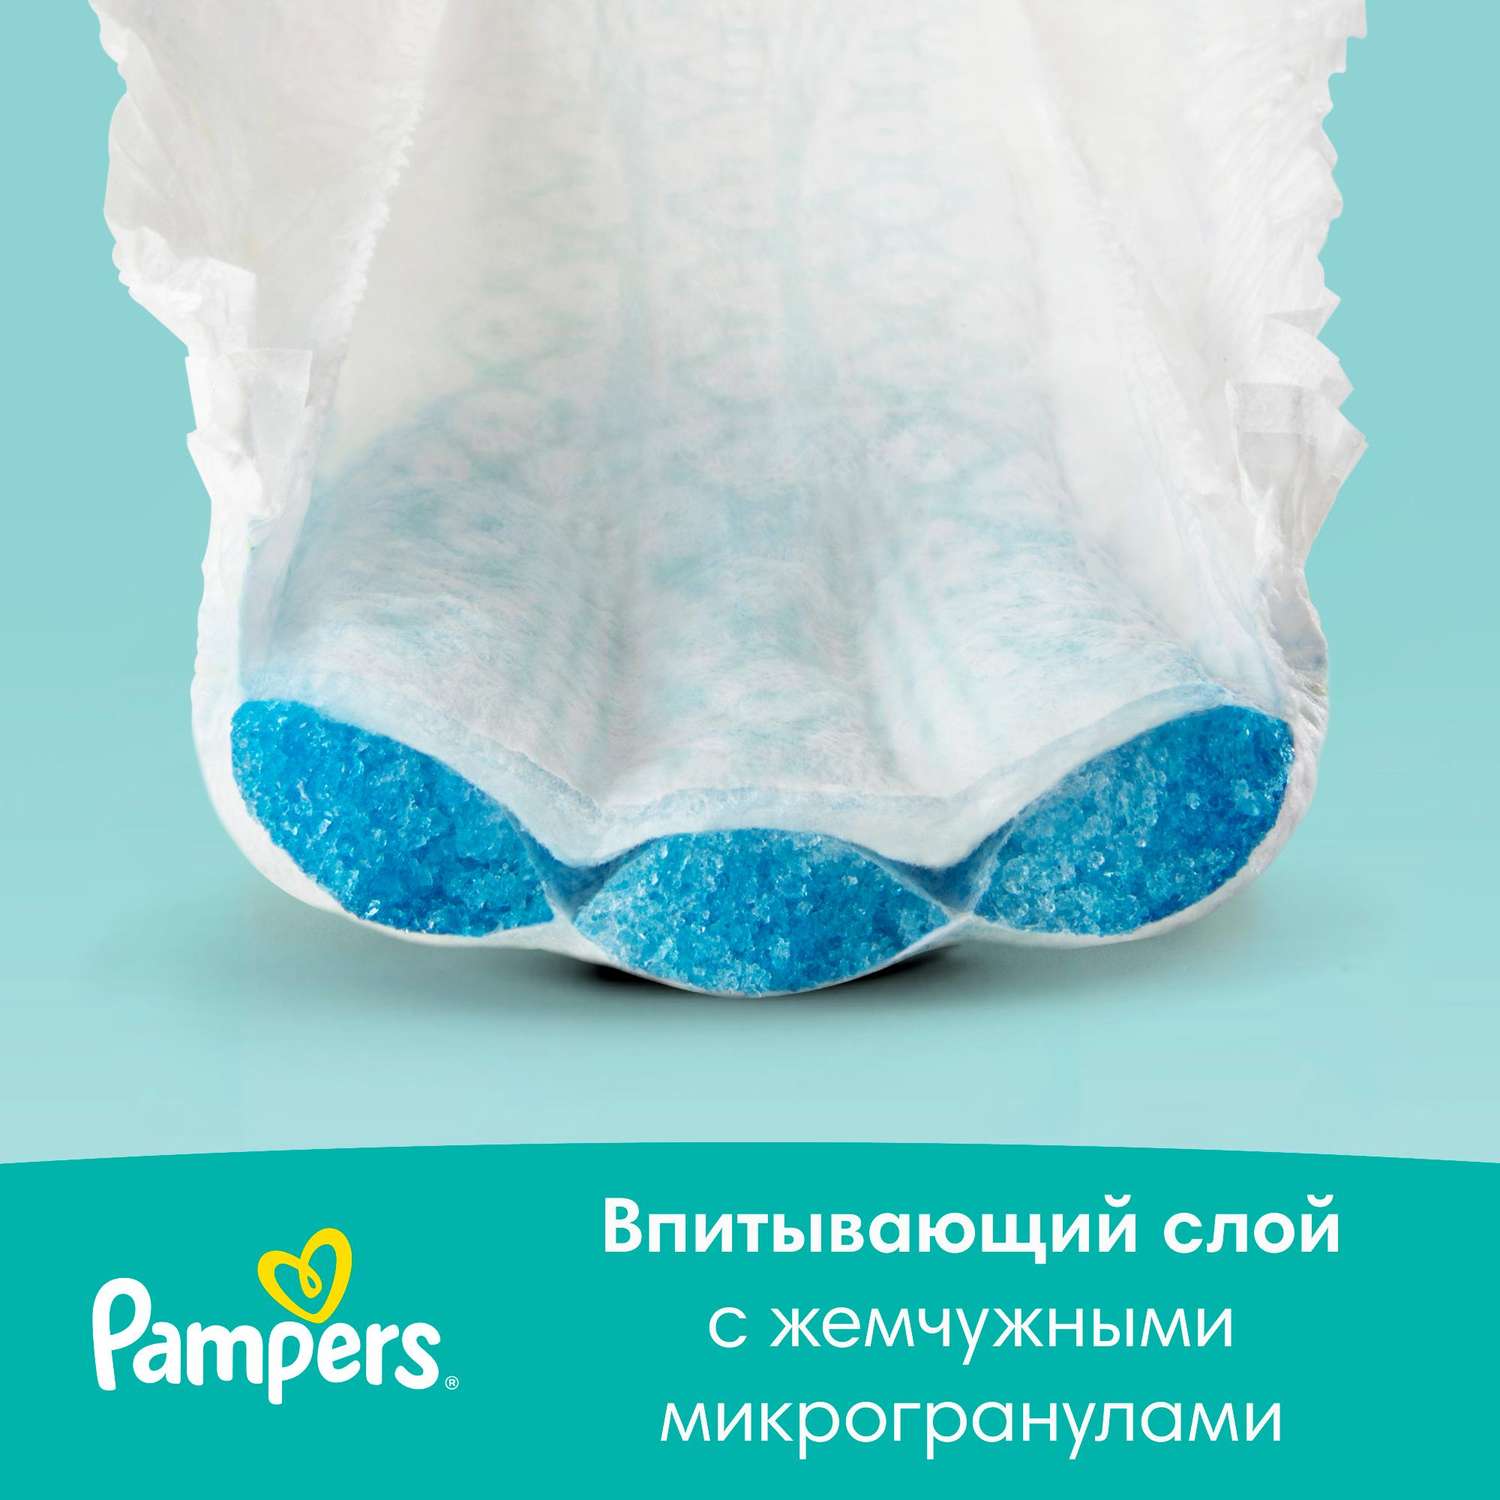 Подгузники Pampers New Baby-Dry 2 4-8кг 94шт - фото 3